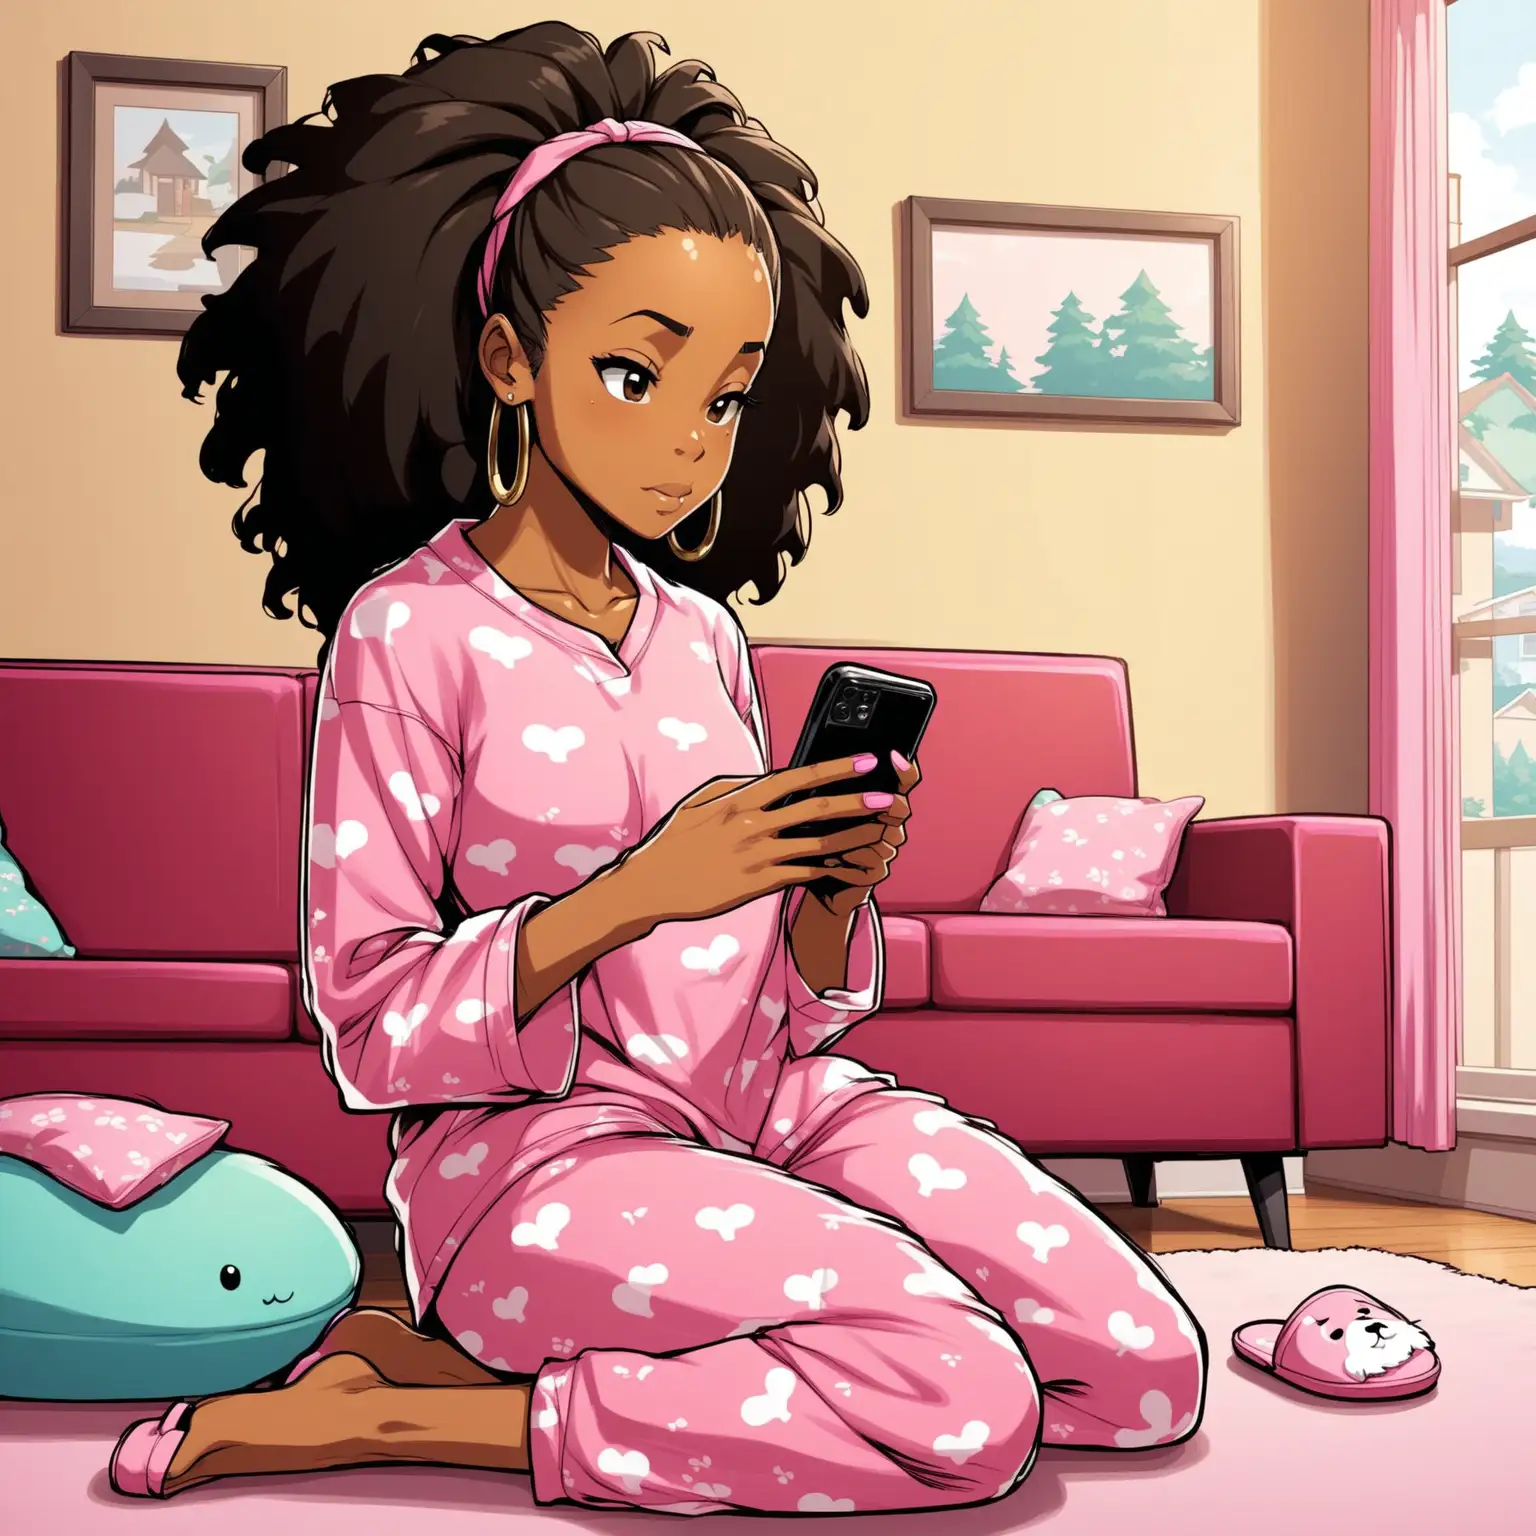 Dark Skin African American Woman in Pink Pajamas Checking Phone in Living Room